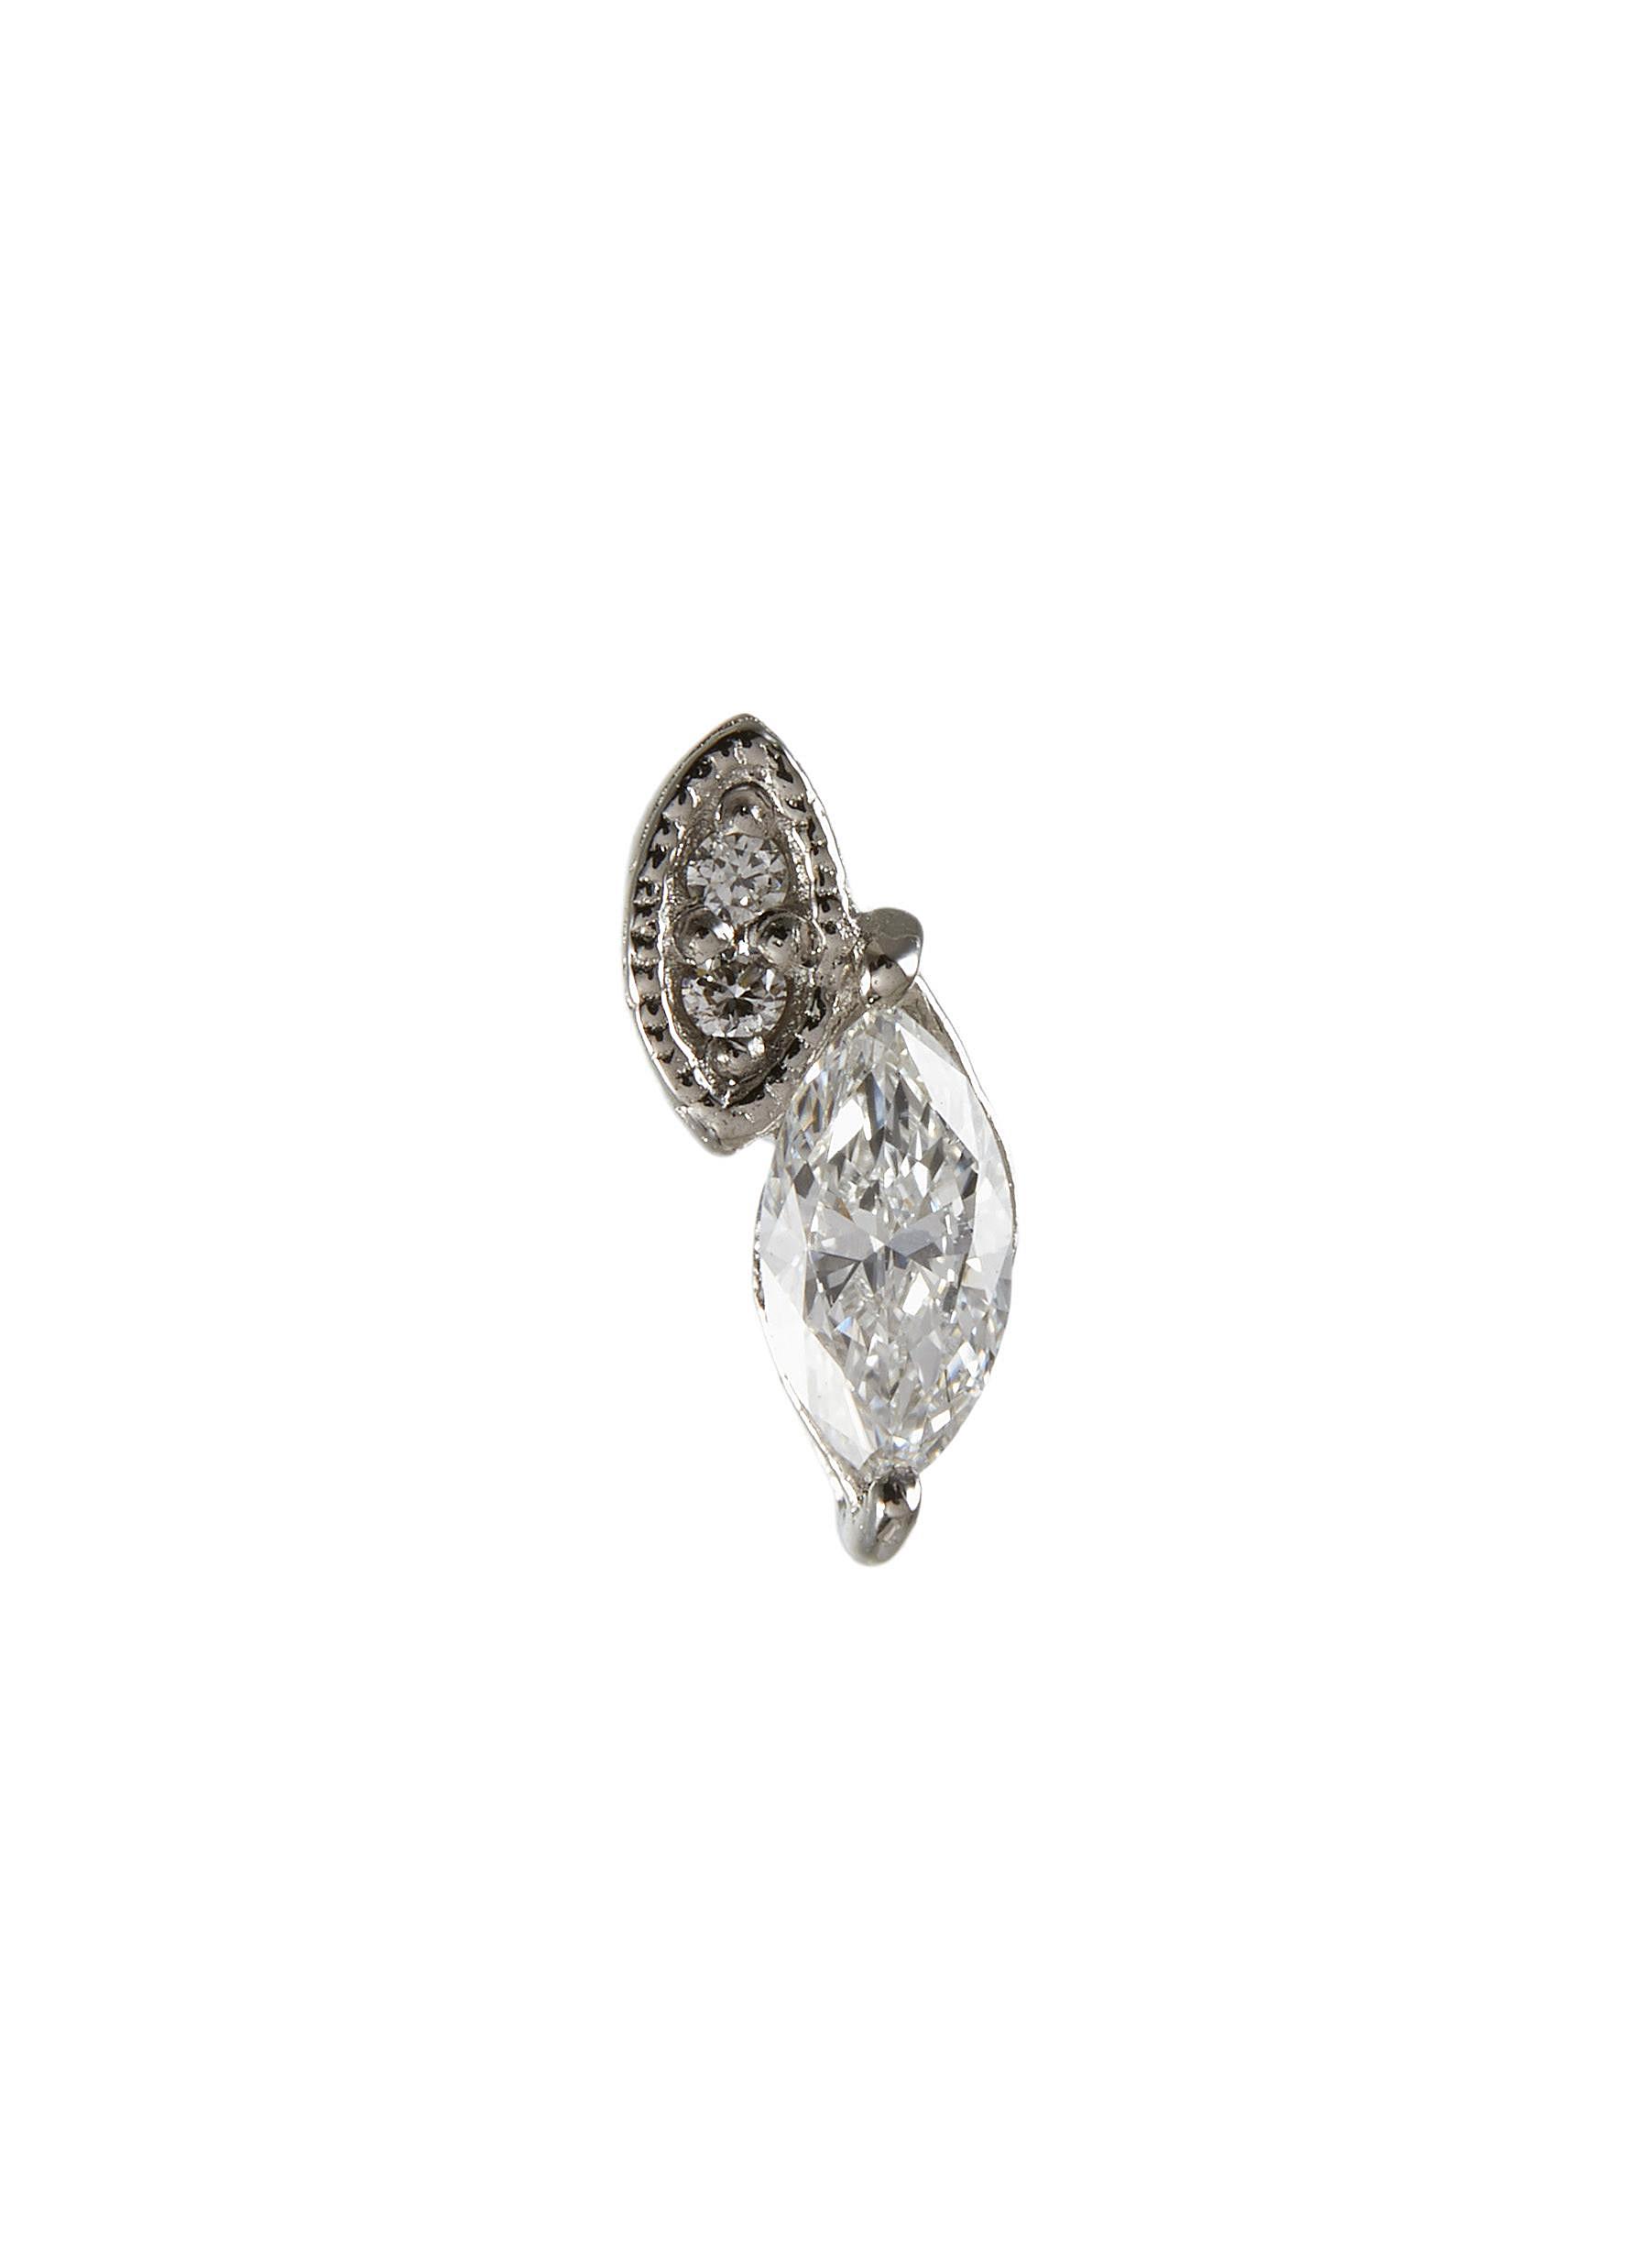 GENTLE DIAMONDS Abelia' lab grown diamond 9k white gold stud earring